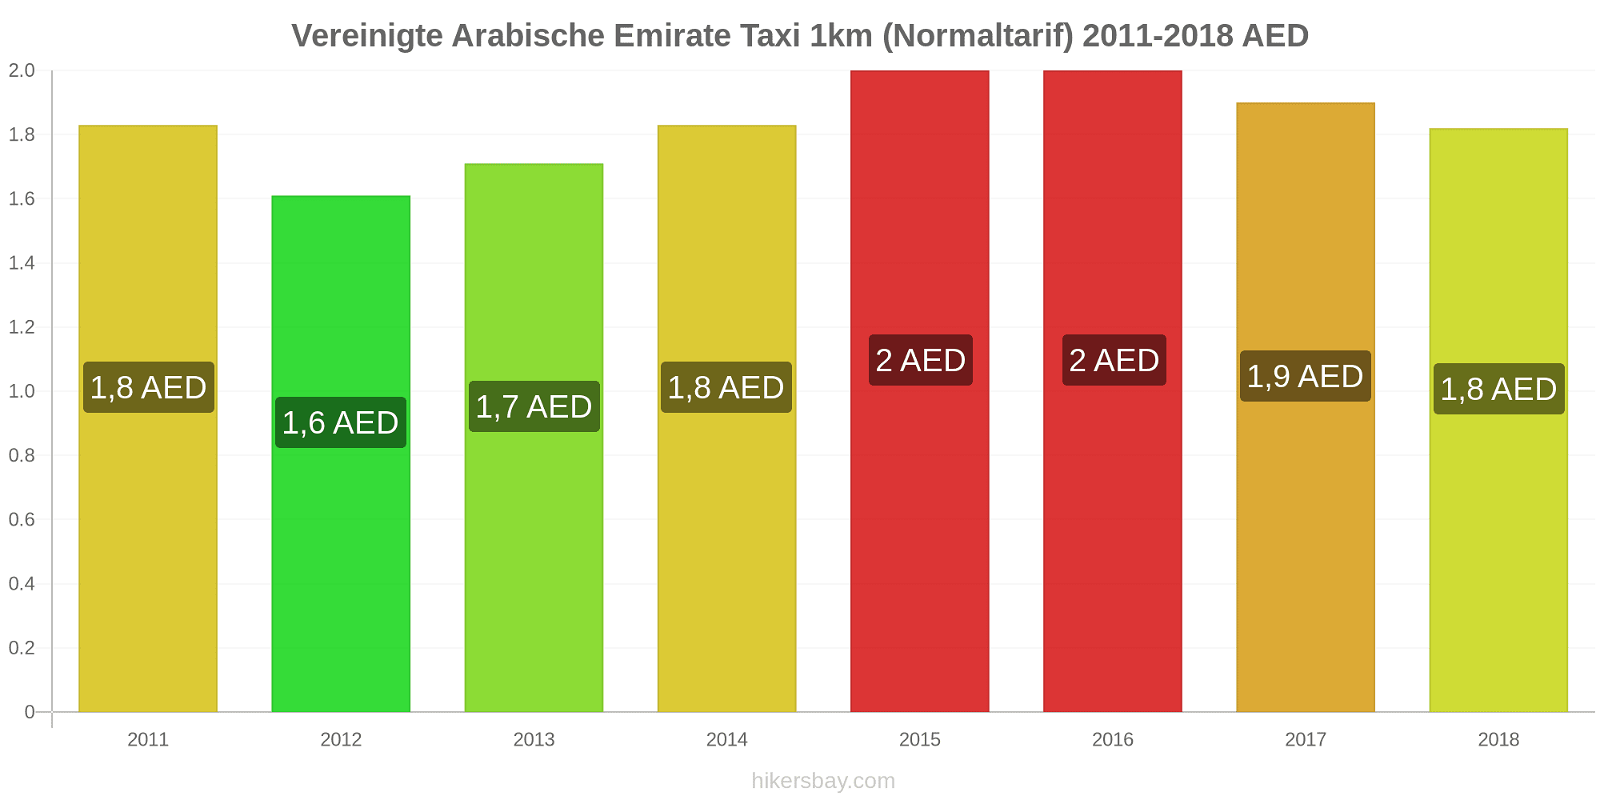 Vereinigte Arabische Emirate Preisänderungen Taxi 1km (Normaltarif) hikersbay.com